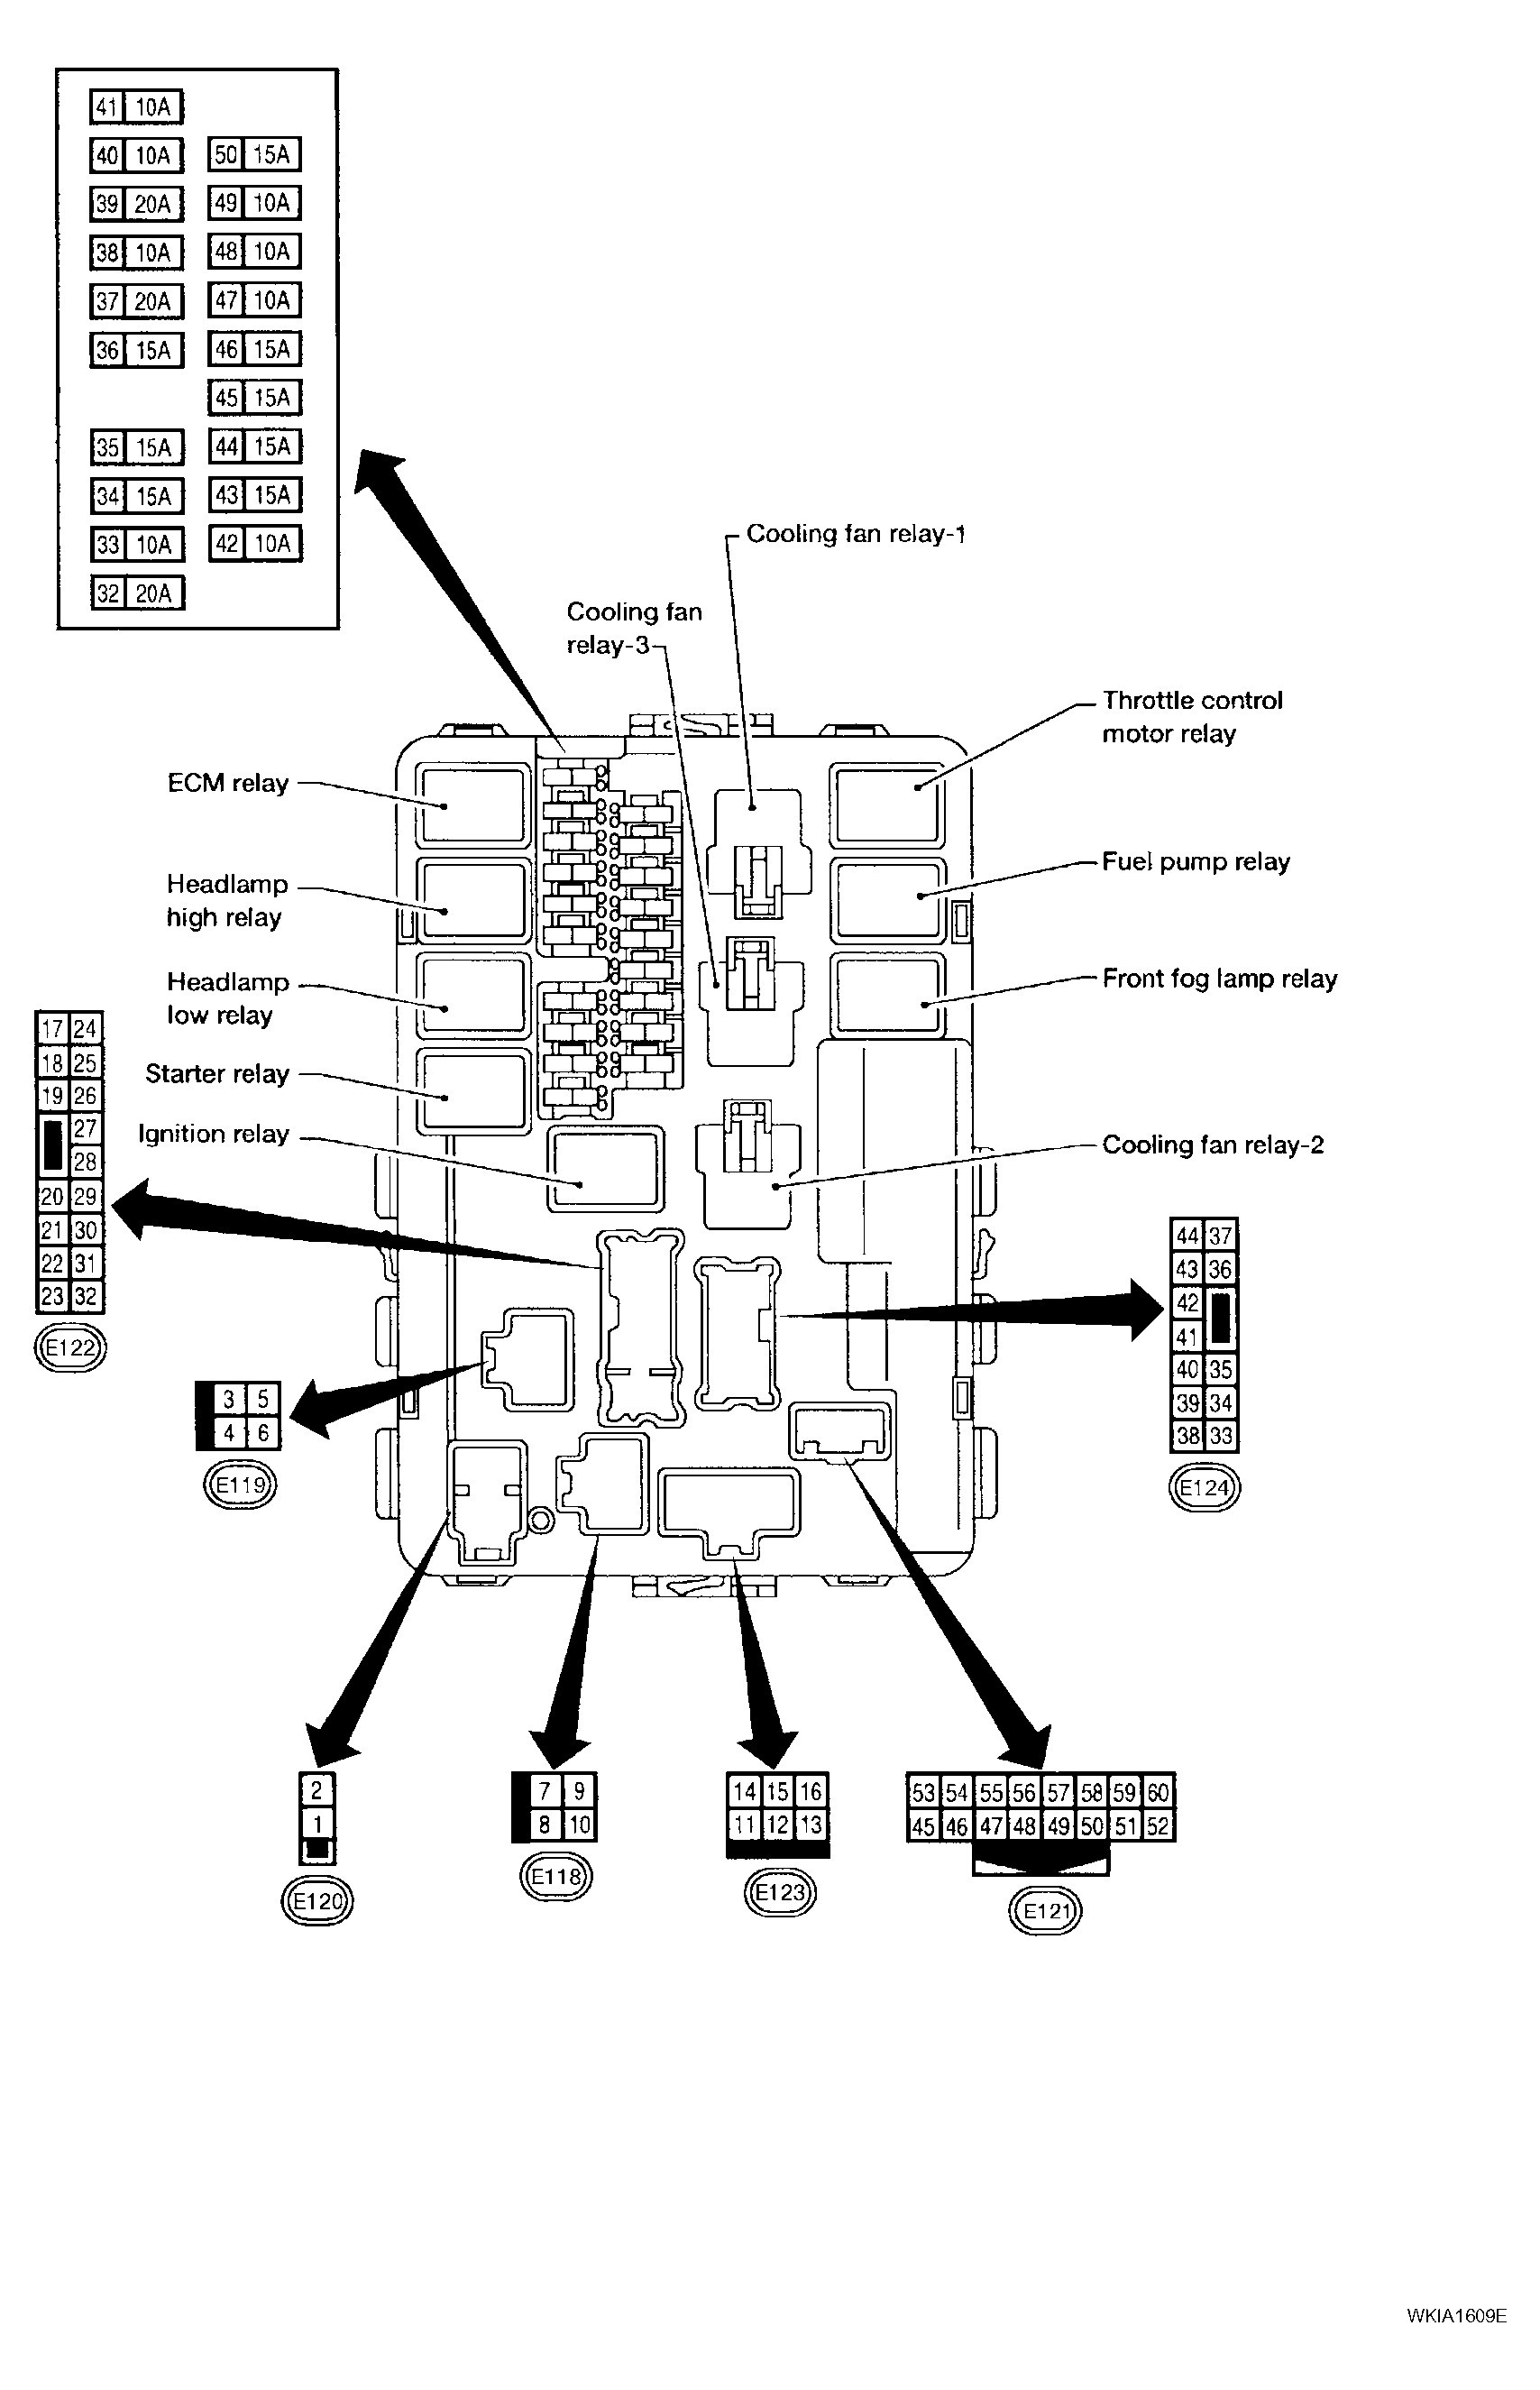 Nissan Frontier Engine Diagram Nissan Maxima Engine Diagram 1986 Wiring Diagram Load Of Nissan Frontier Engine Diagram